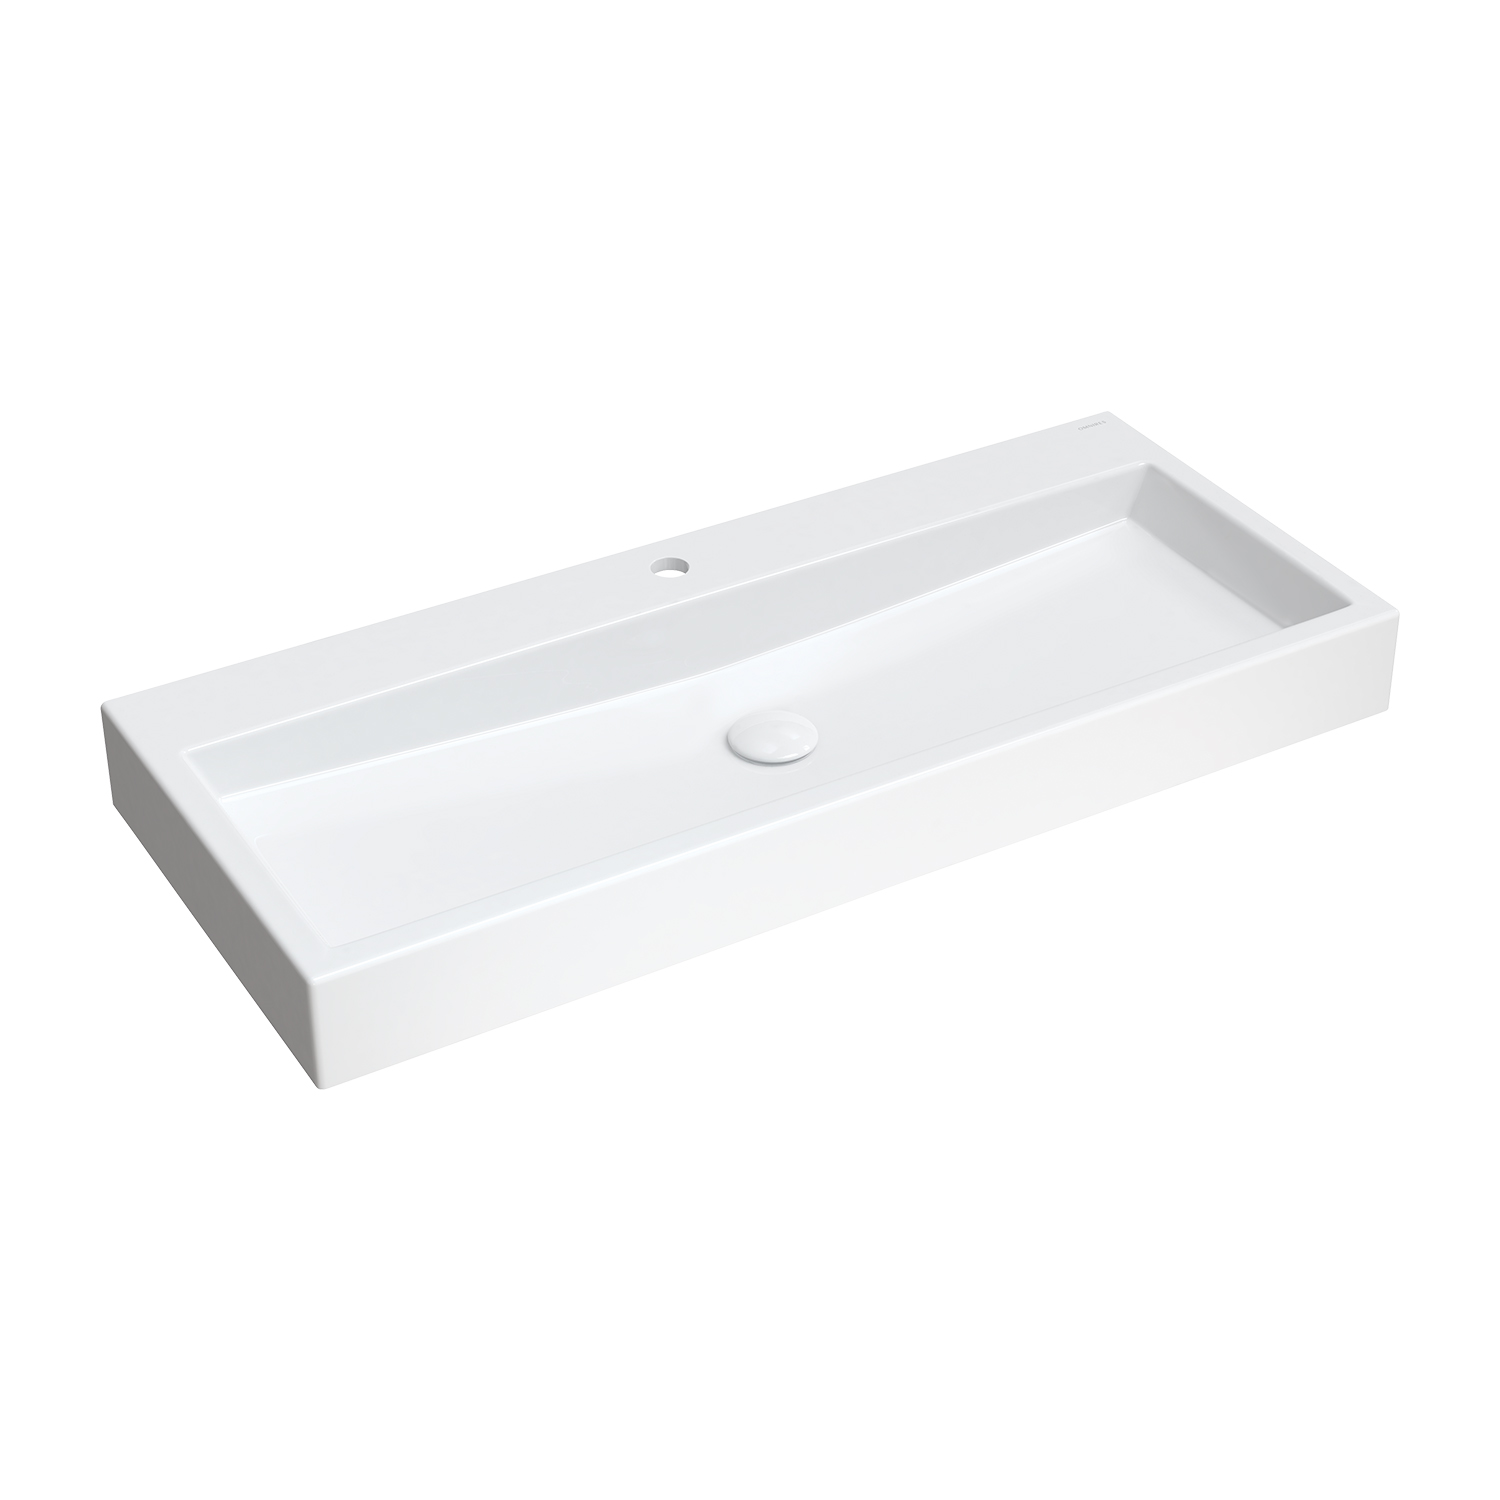 countertop/wall-mounted basin, 100 x 42 cm